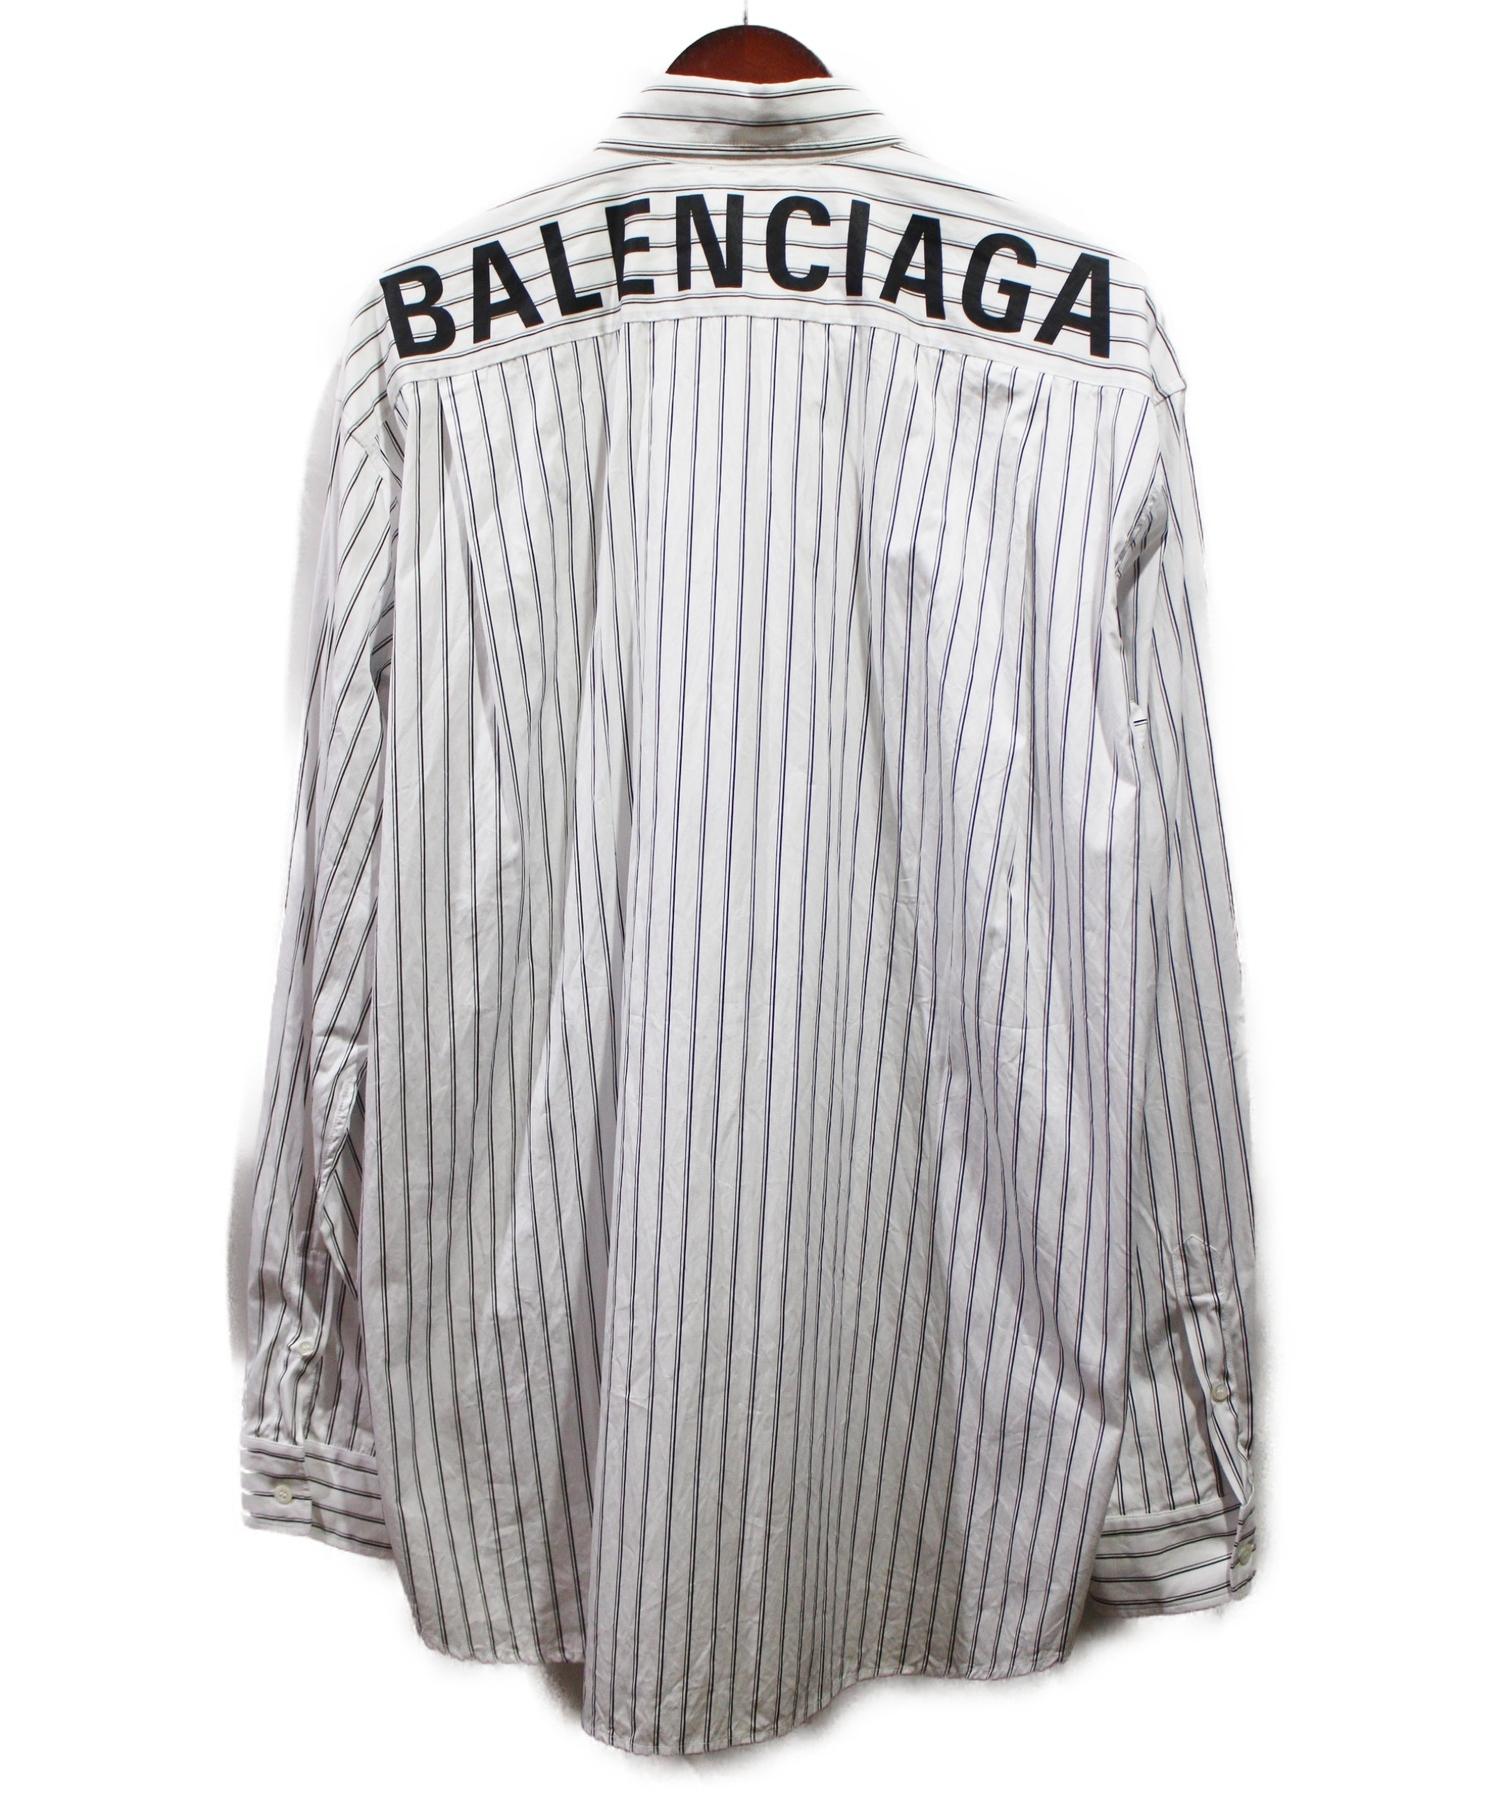 『BALENCIAGA』バレンシアガ (38) ストライプシャツ